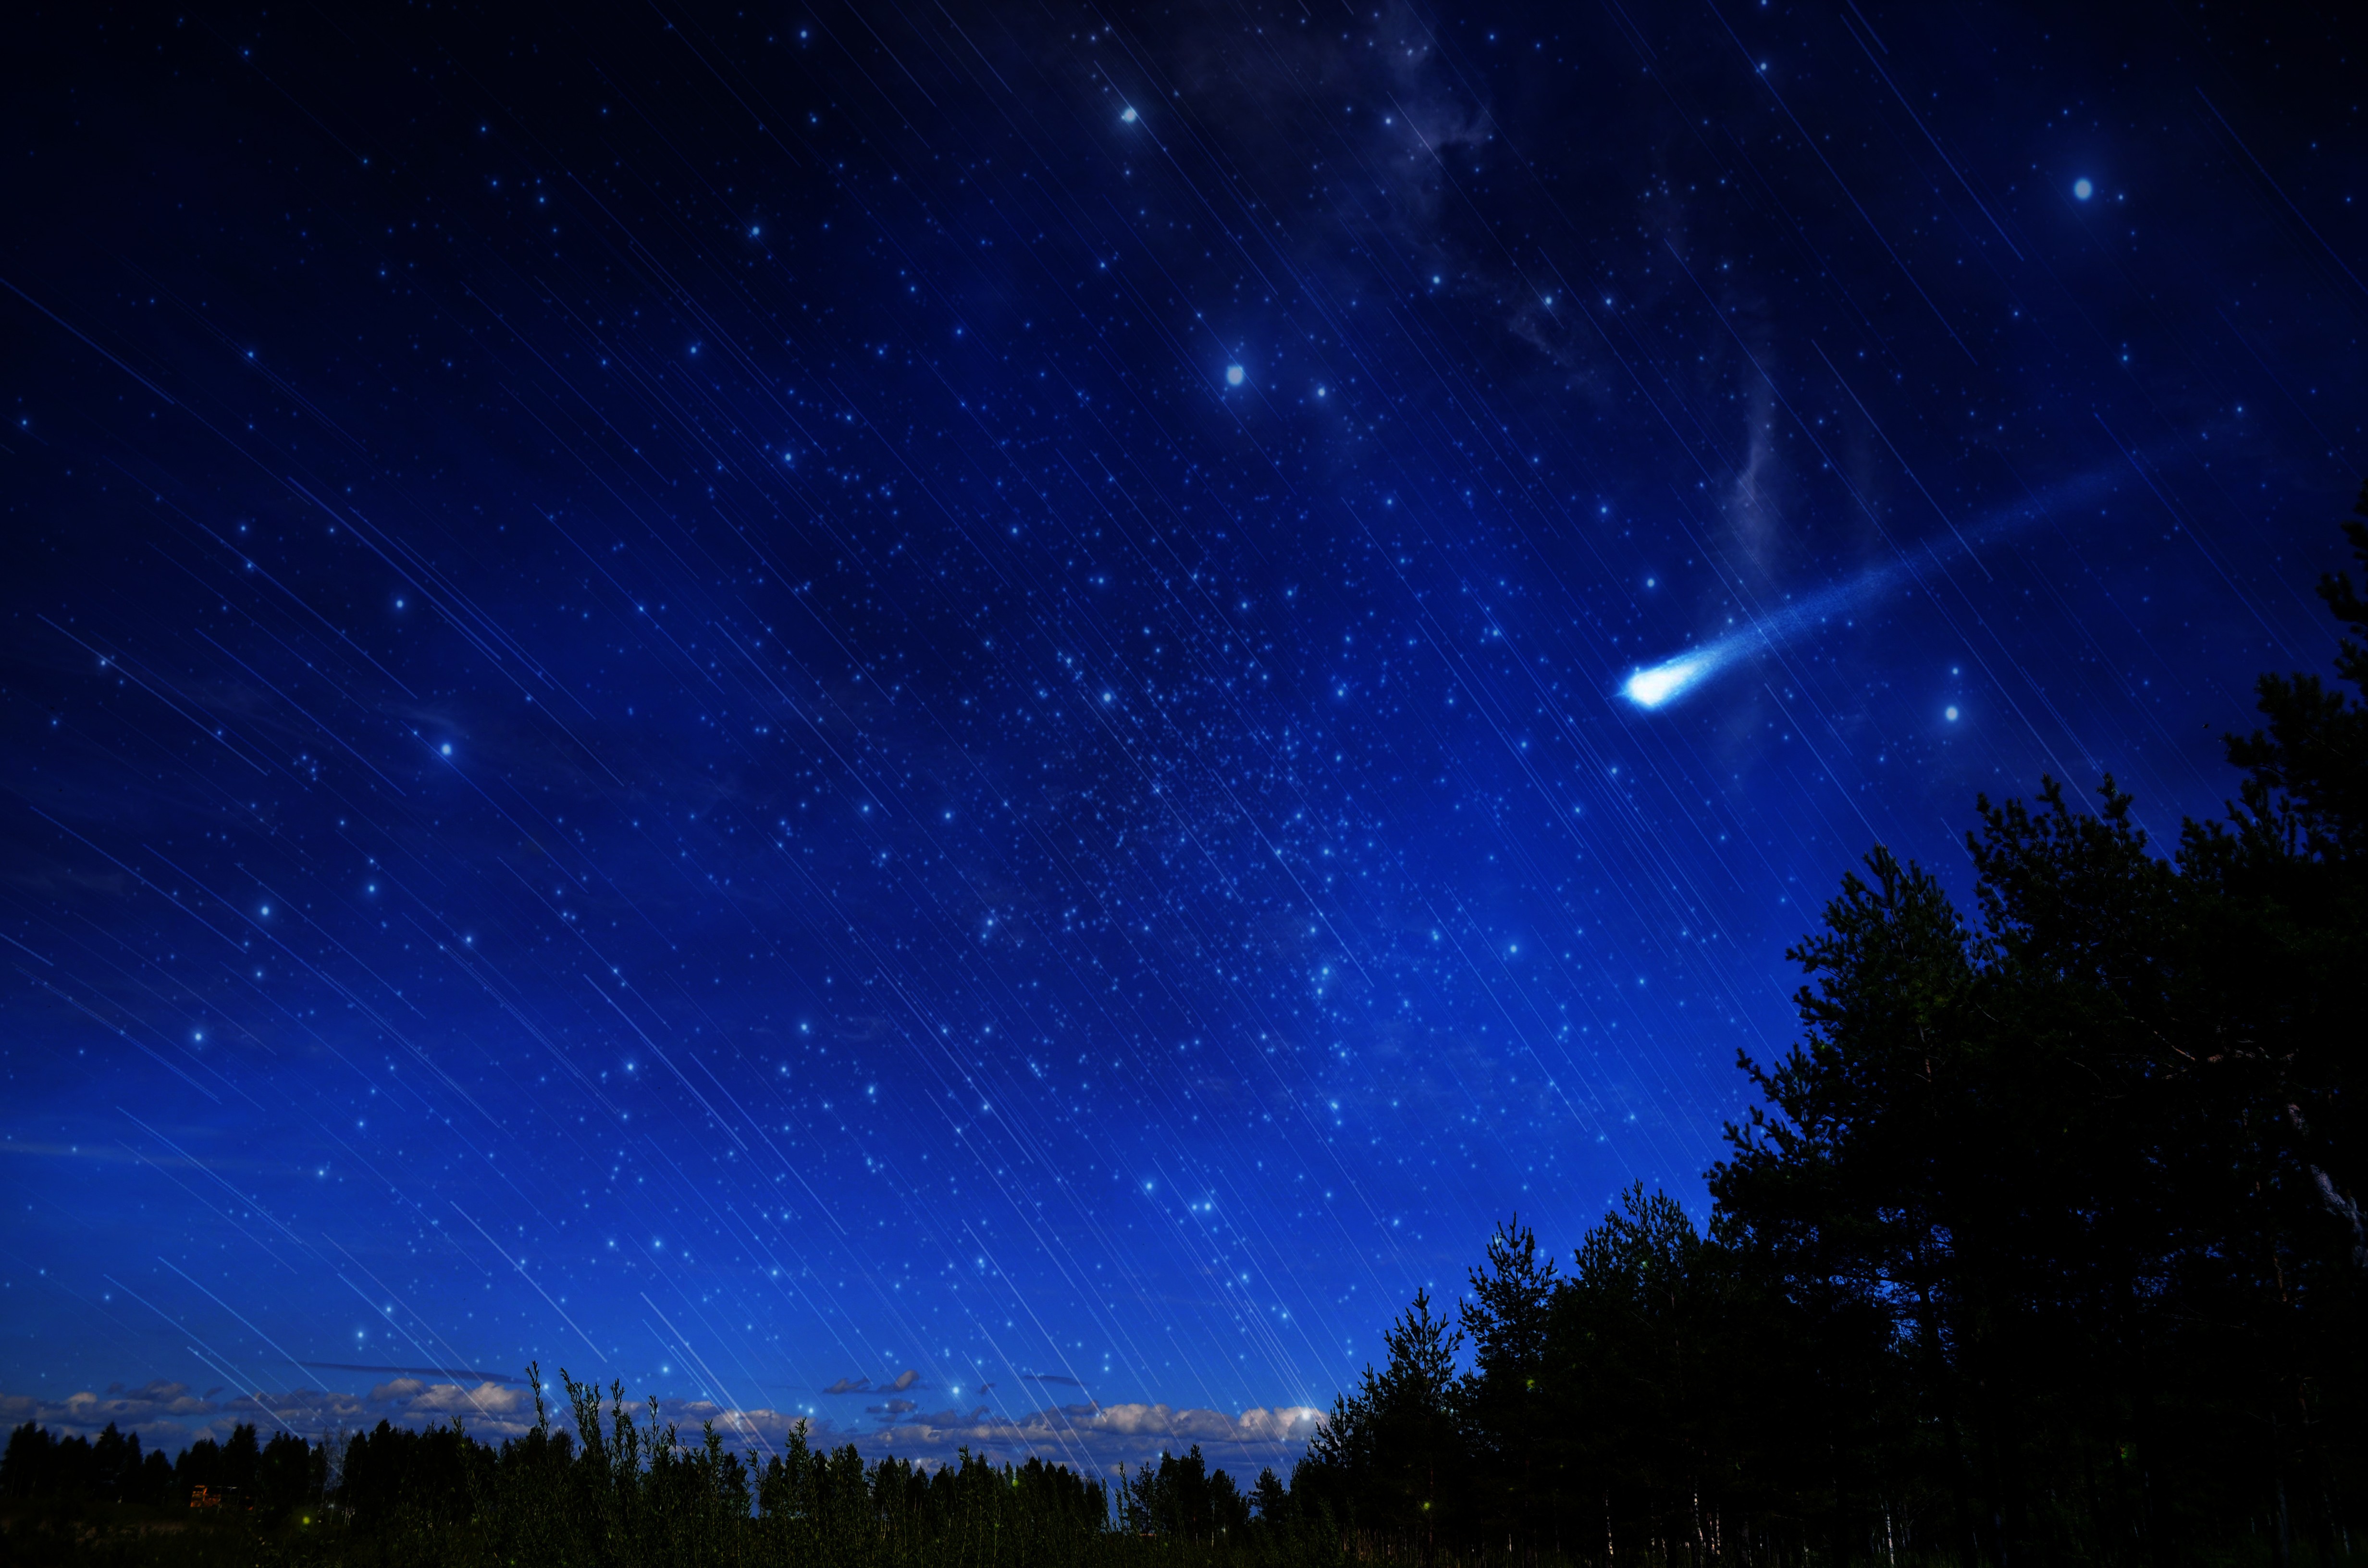 Space_Comet_in_the_starry_sky_106030_.jpg